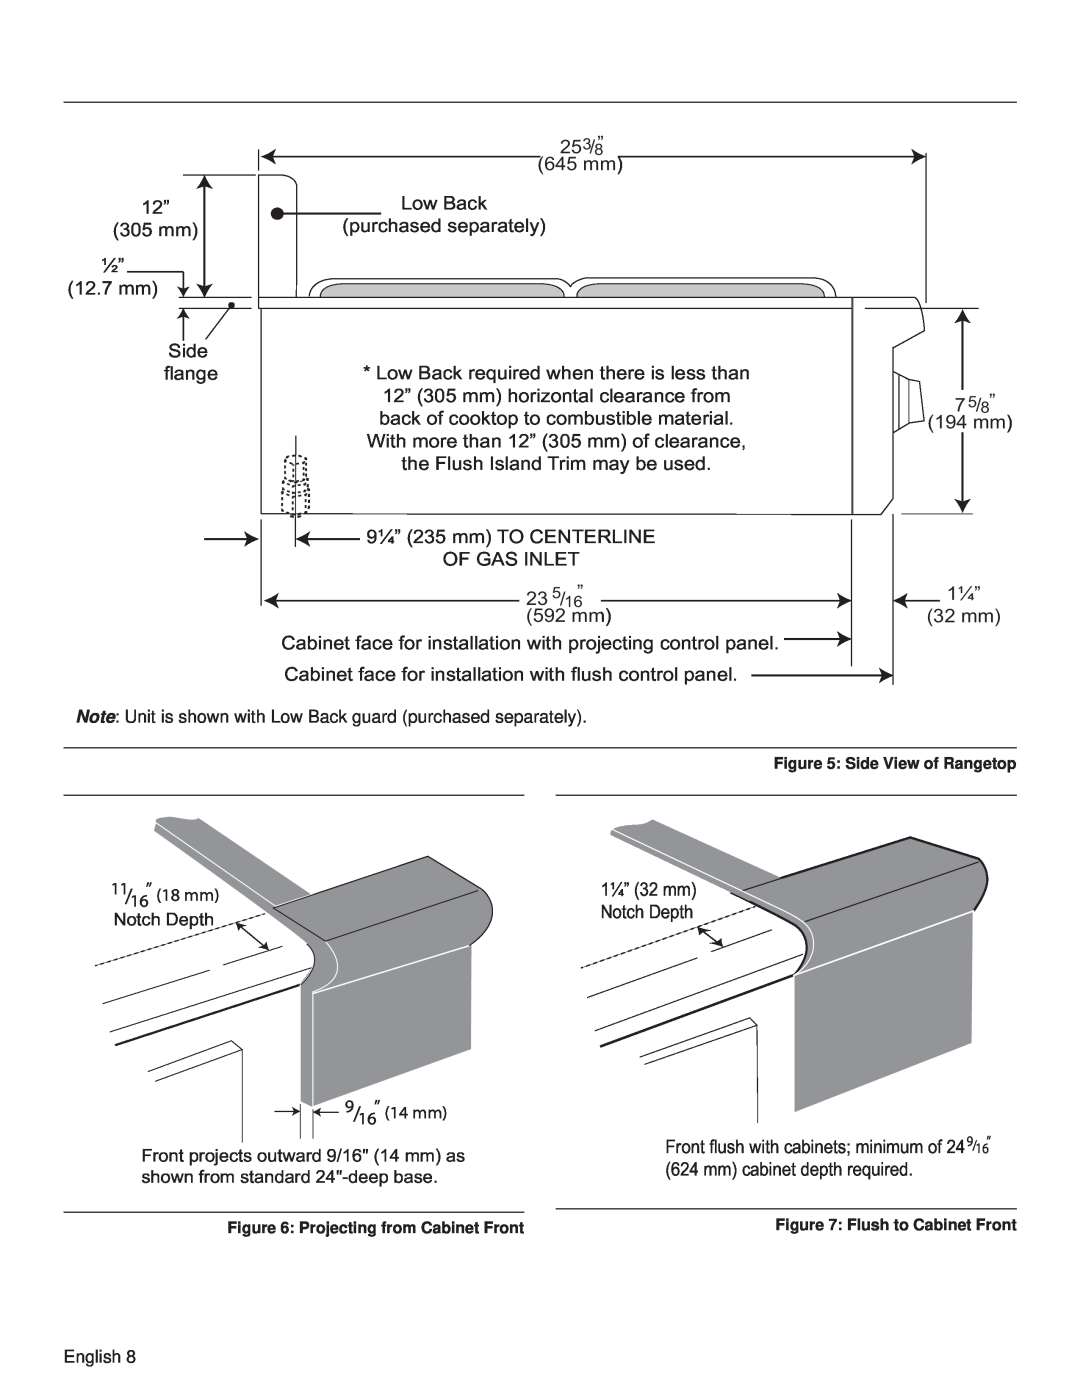 Thermador PCG48, PCG36, PCG30 installation manual 12” 305 mm ½” 12.7 mm Side flange 